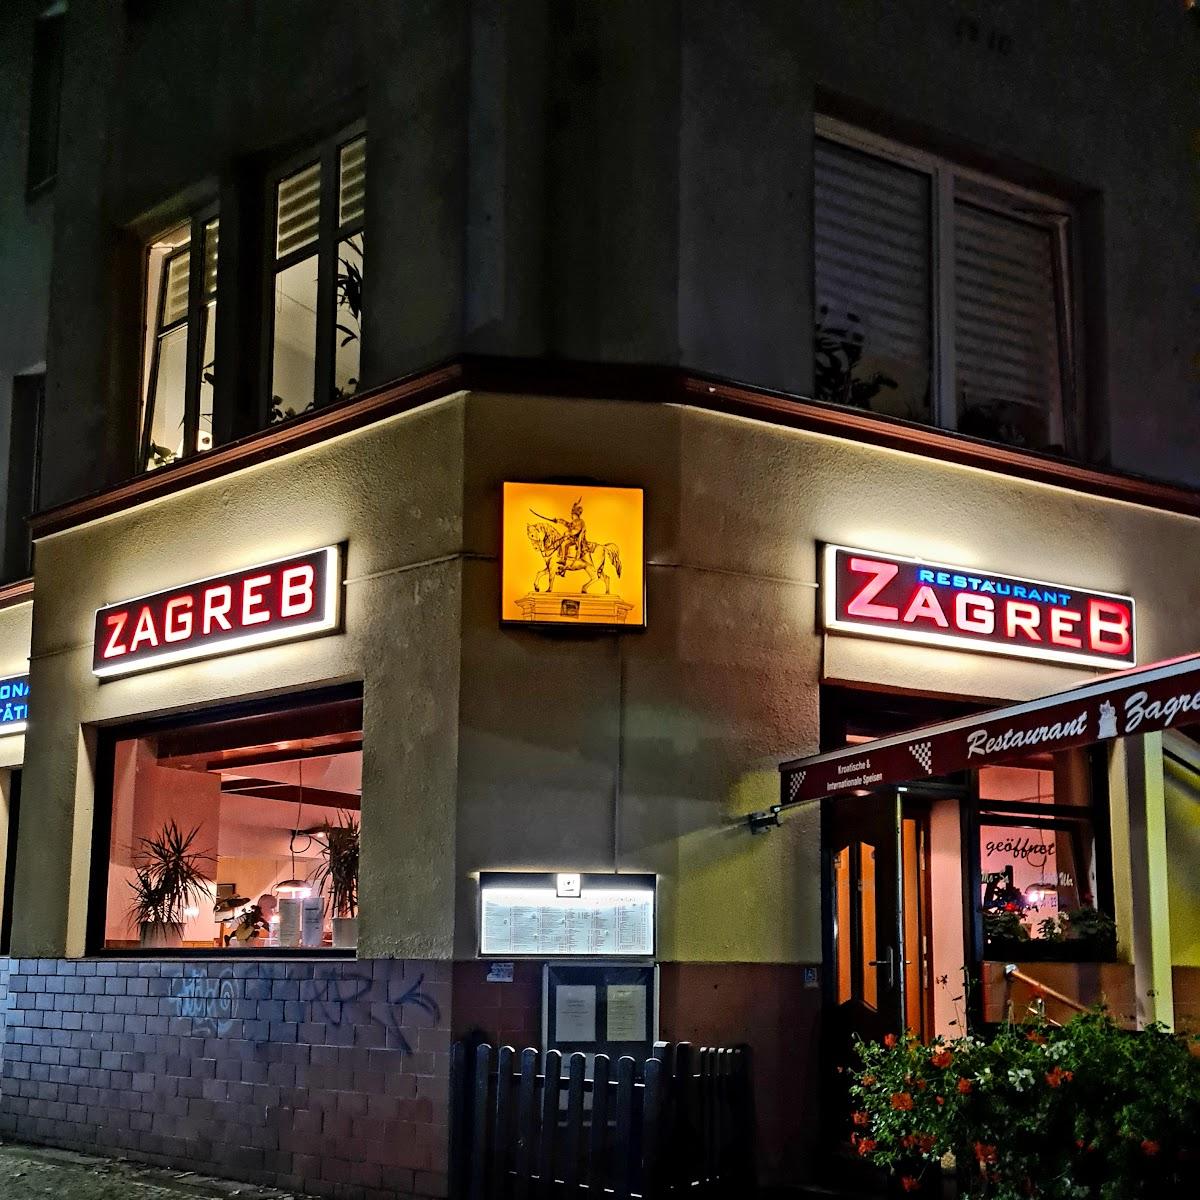 Restaurant "Restaurant Zagreb" in Berlin